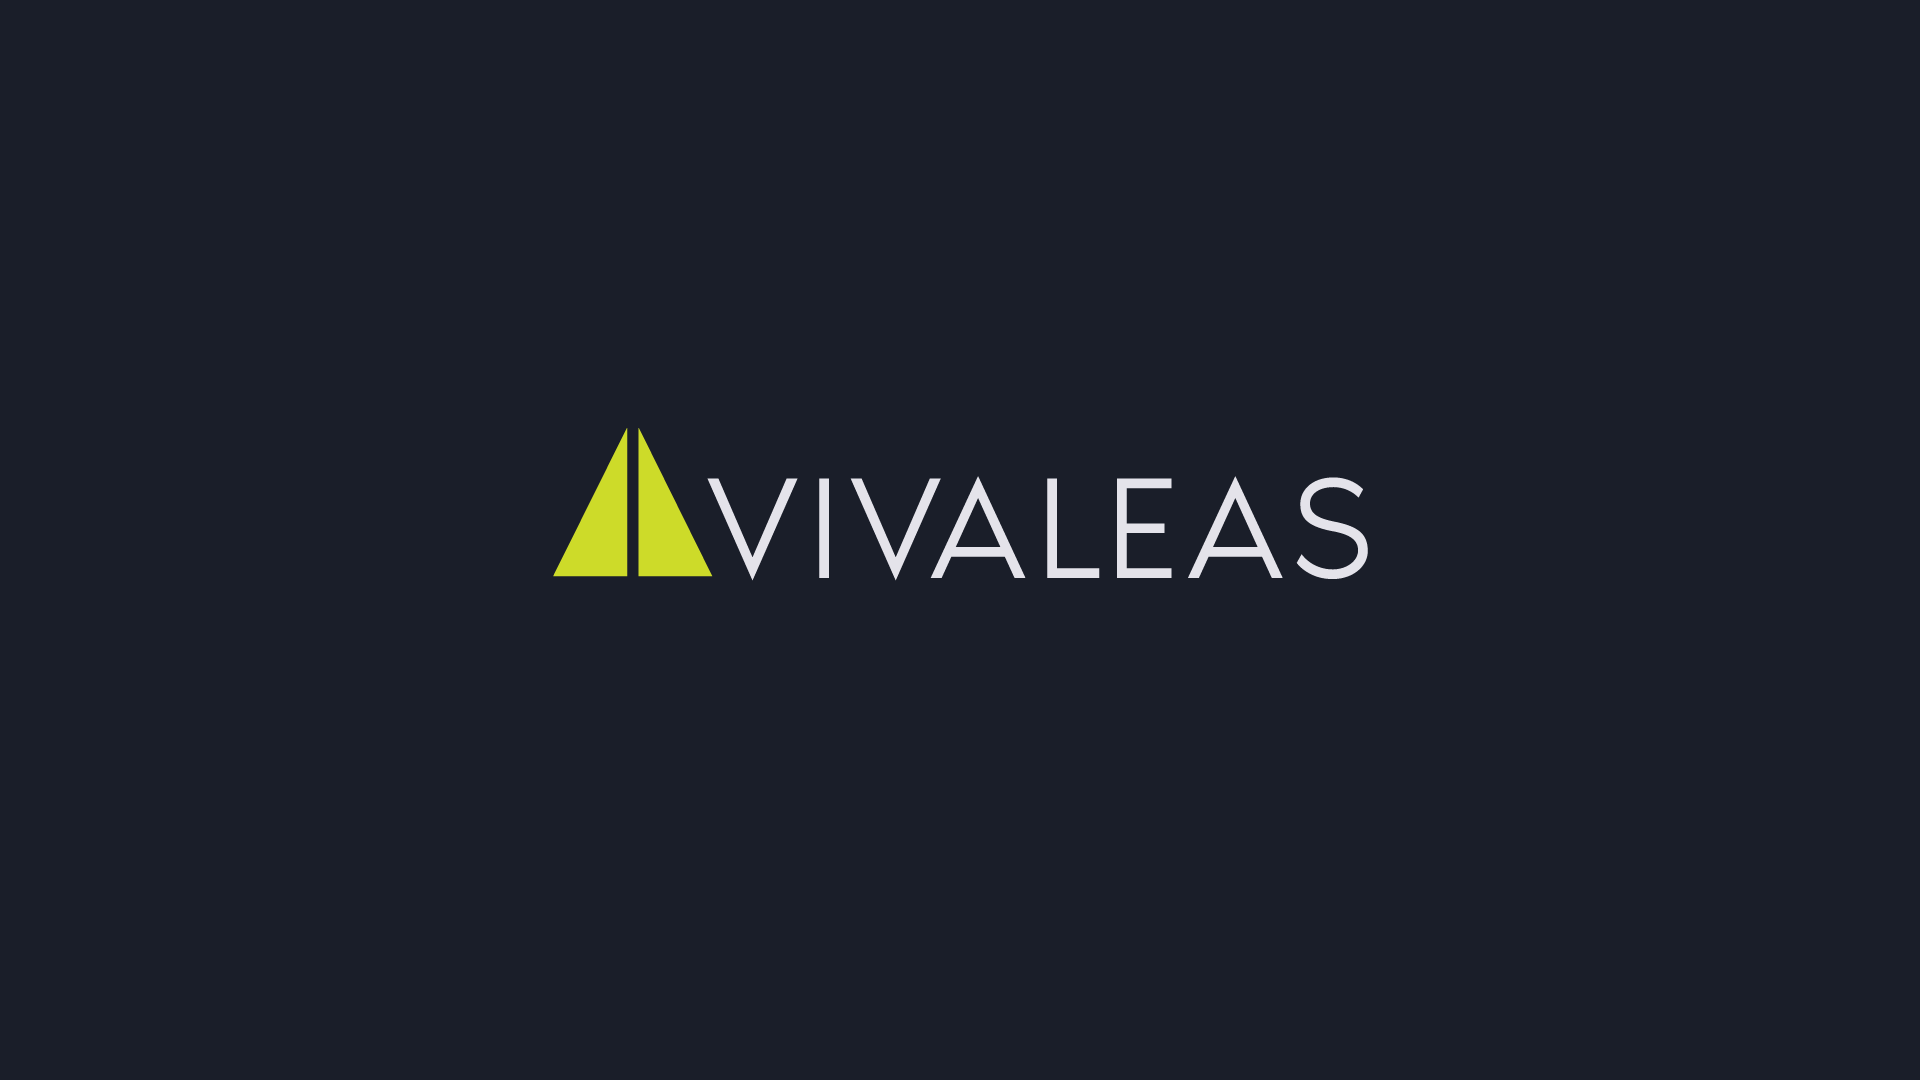 1821-vivaleas-logo.png